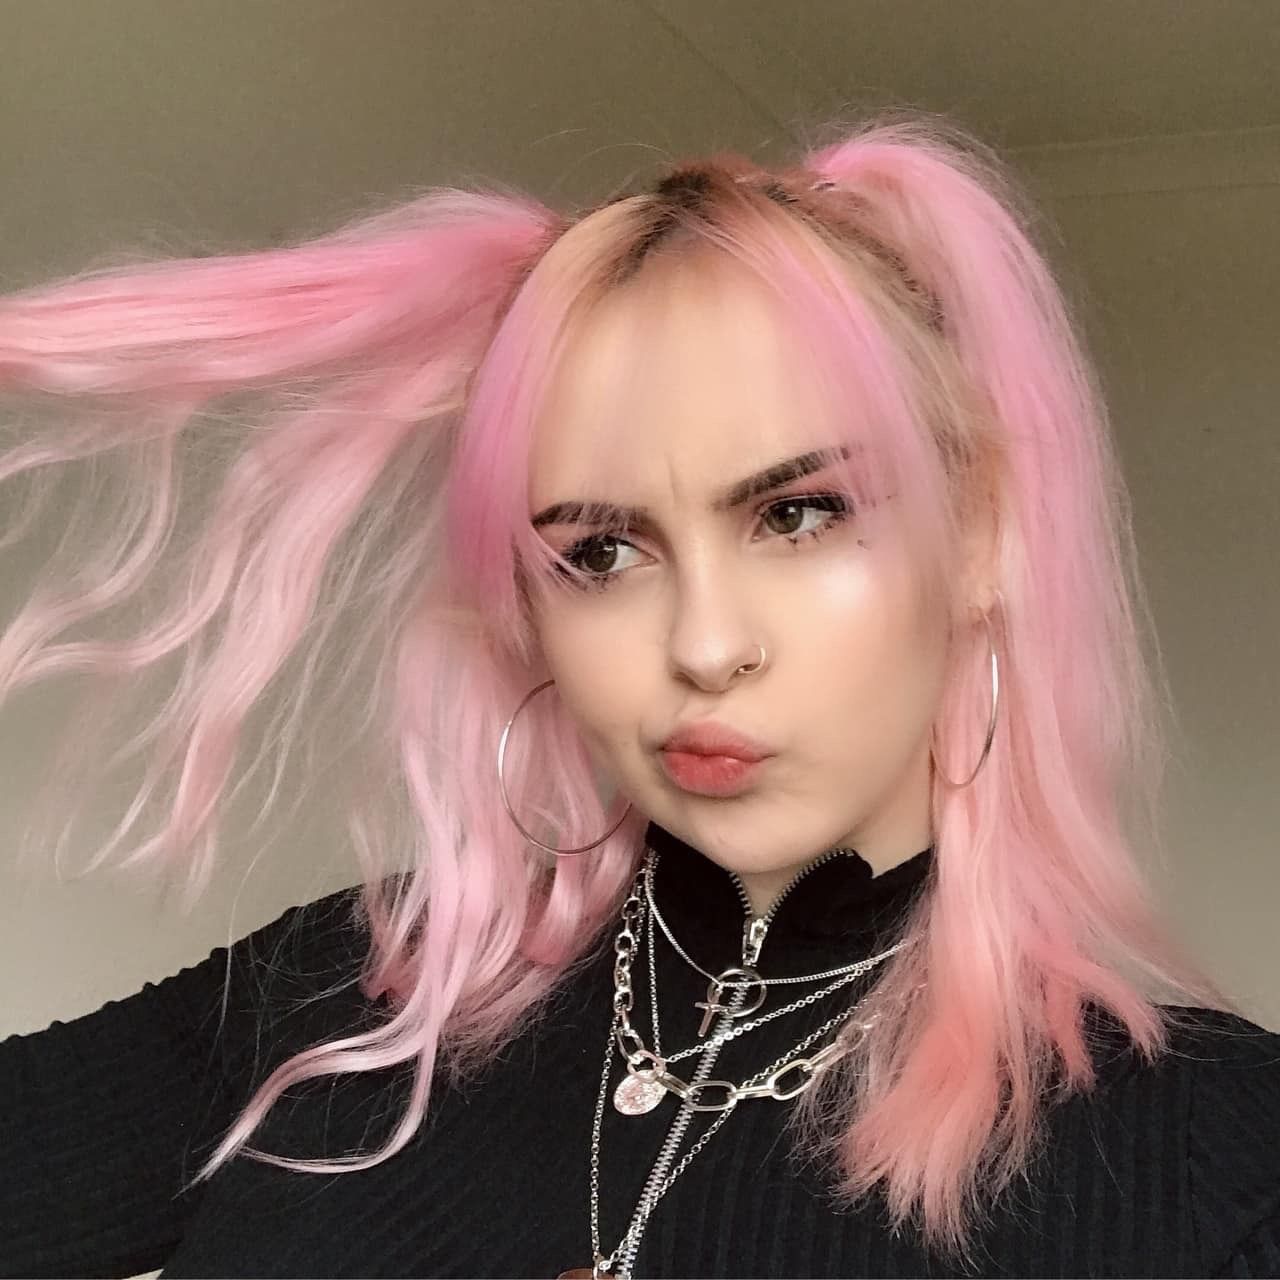 Pink hair girl - Wallpaper Cave